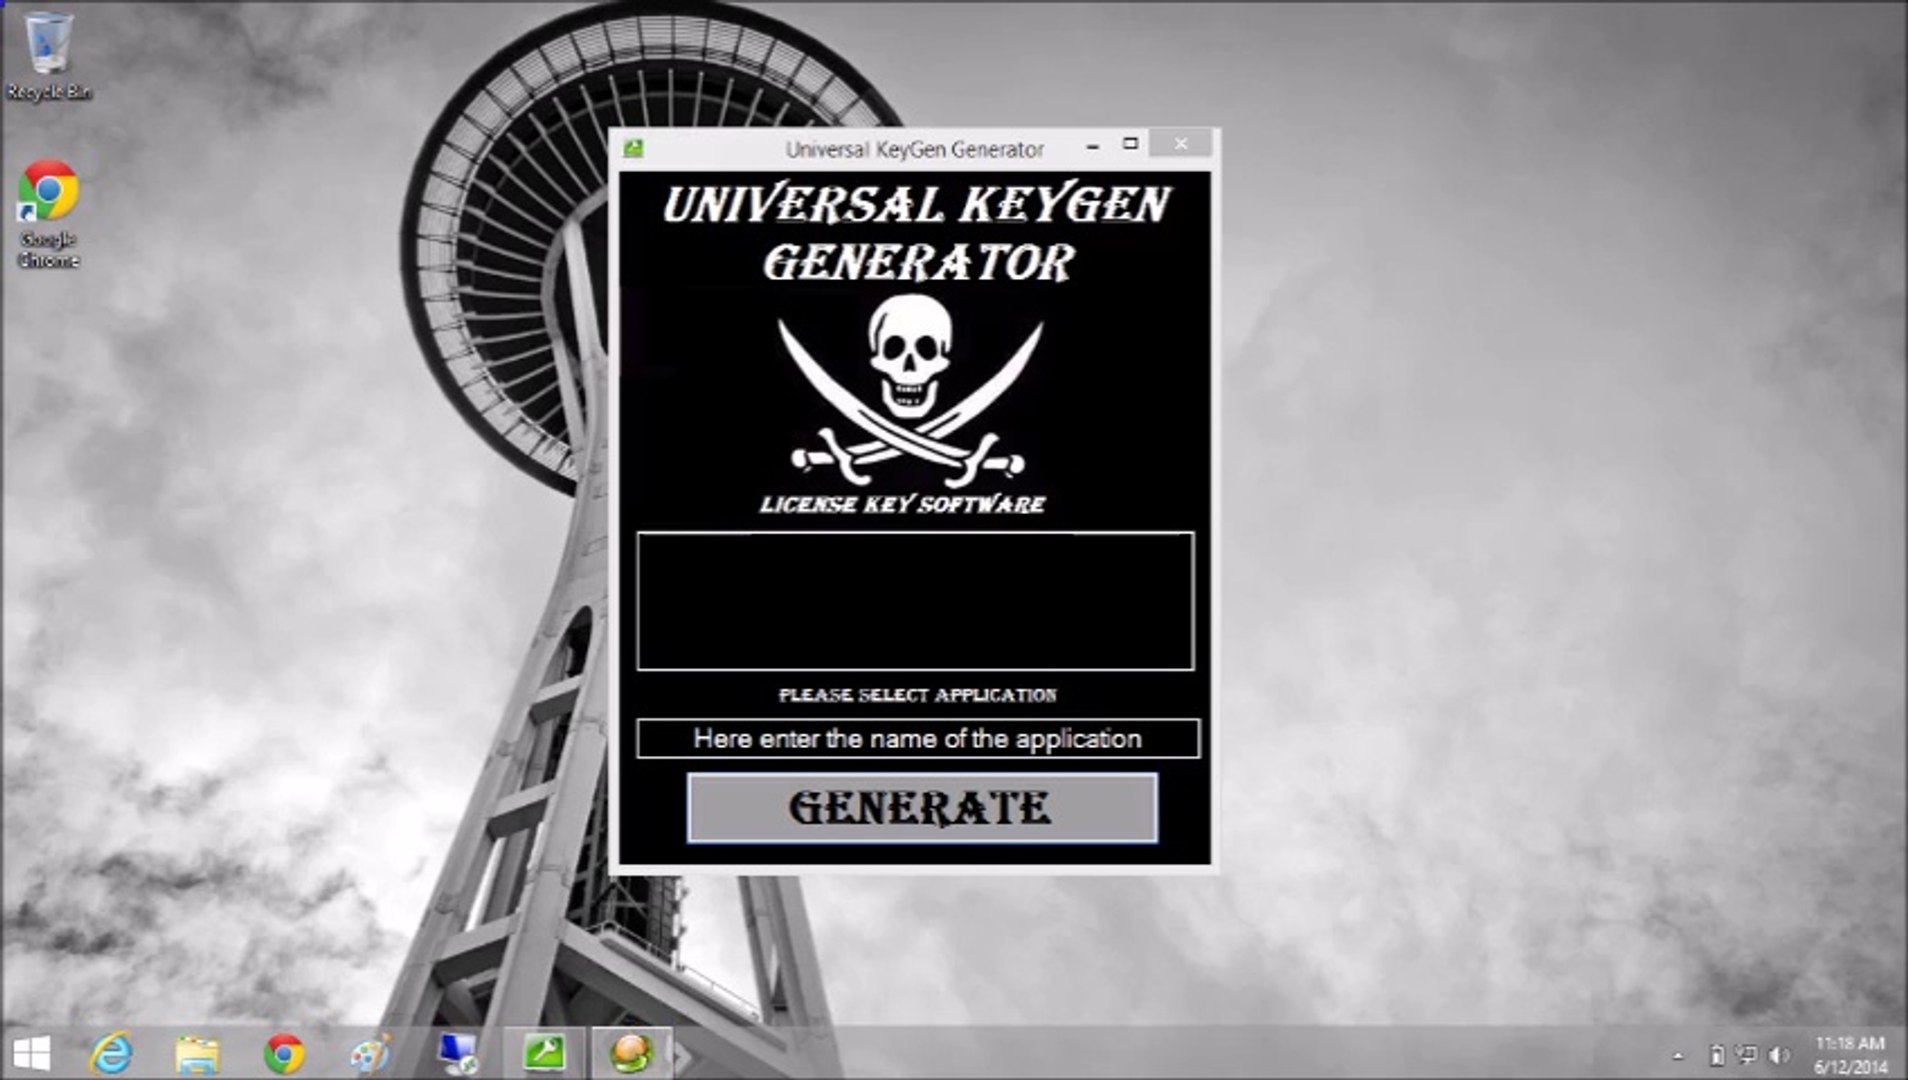 Plagiarism detector full version keygen download windows 10